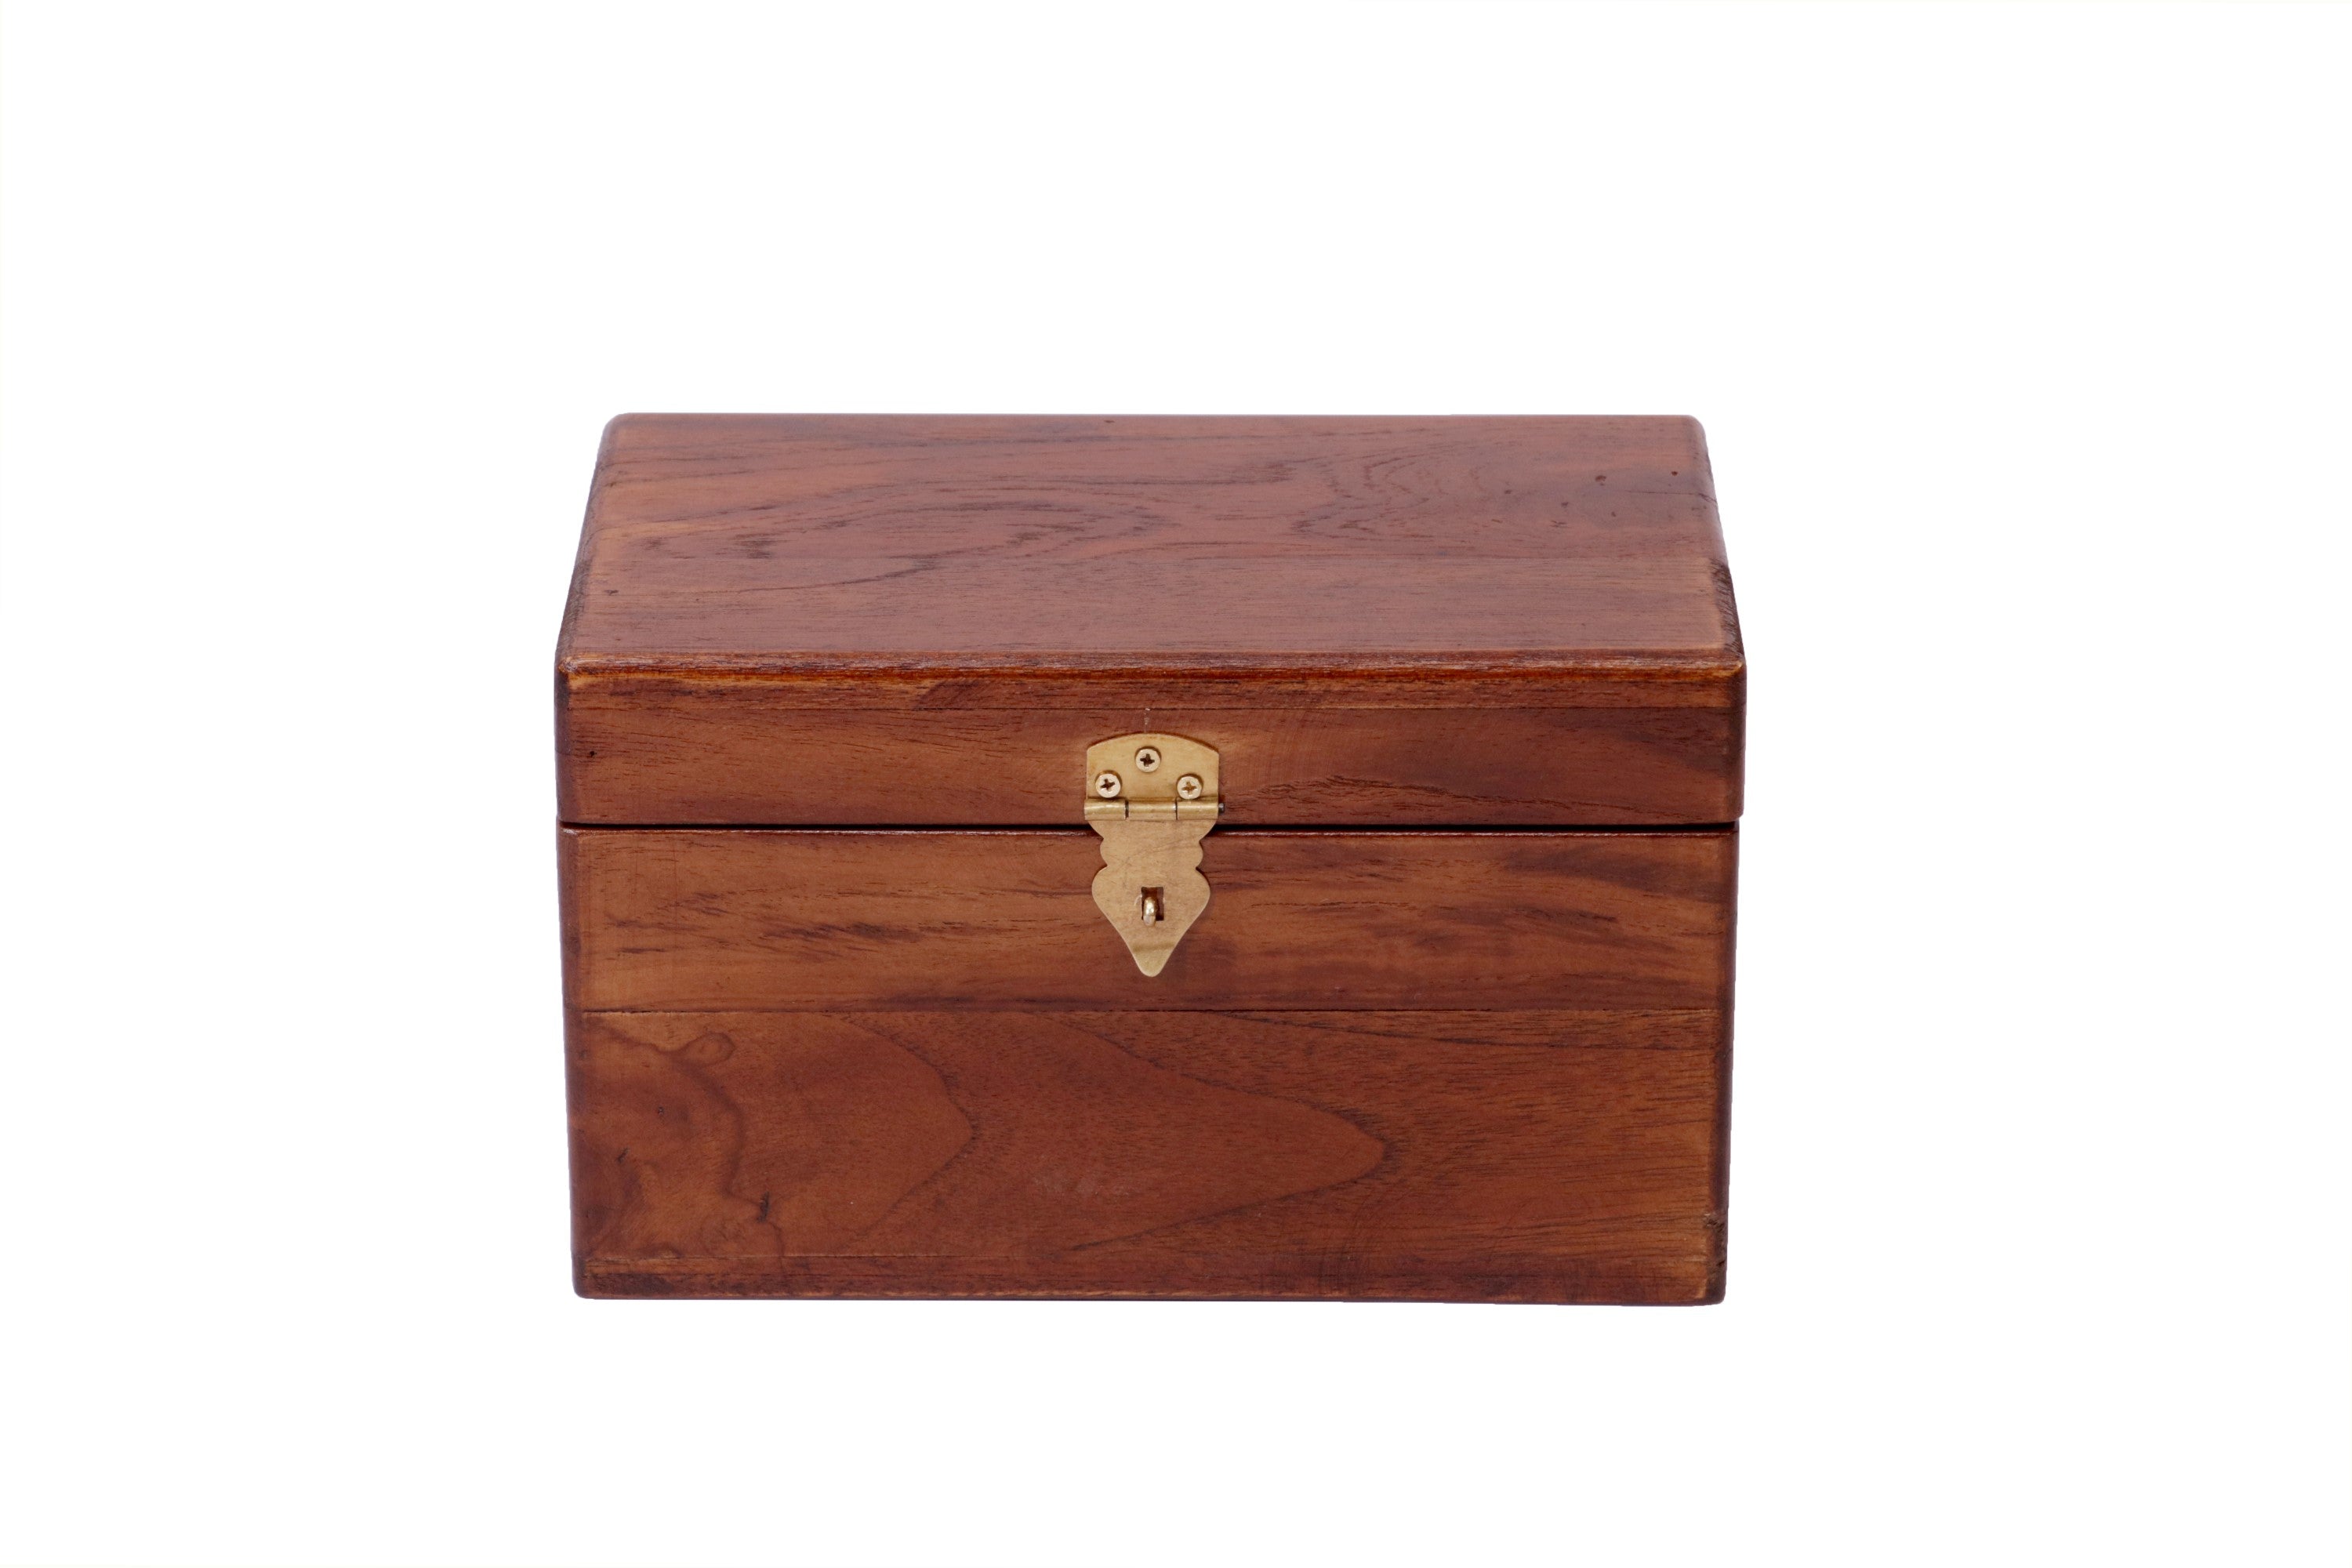 Wooden Simplistic Boxes Medium (10 x 6 x 6 Inch) Wooden Box